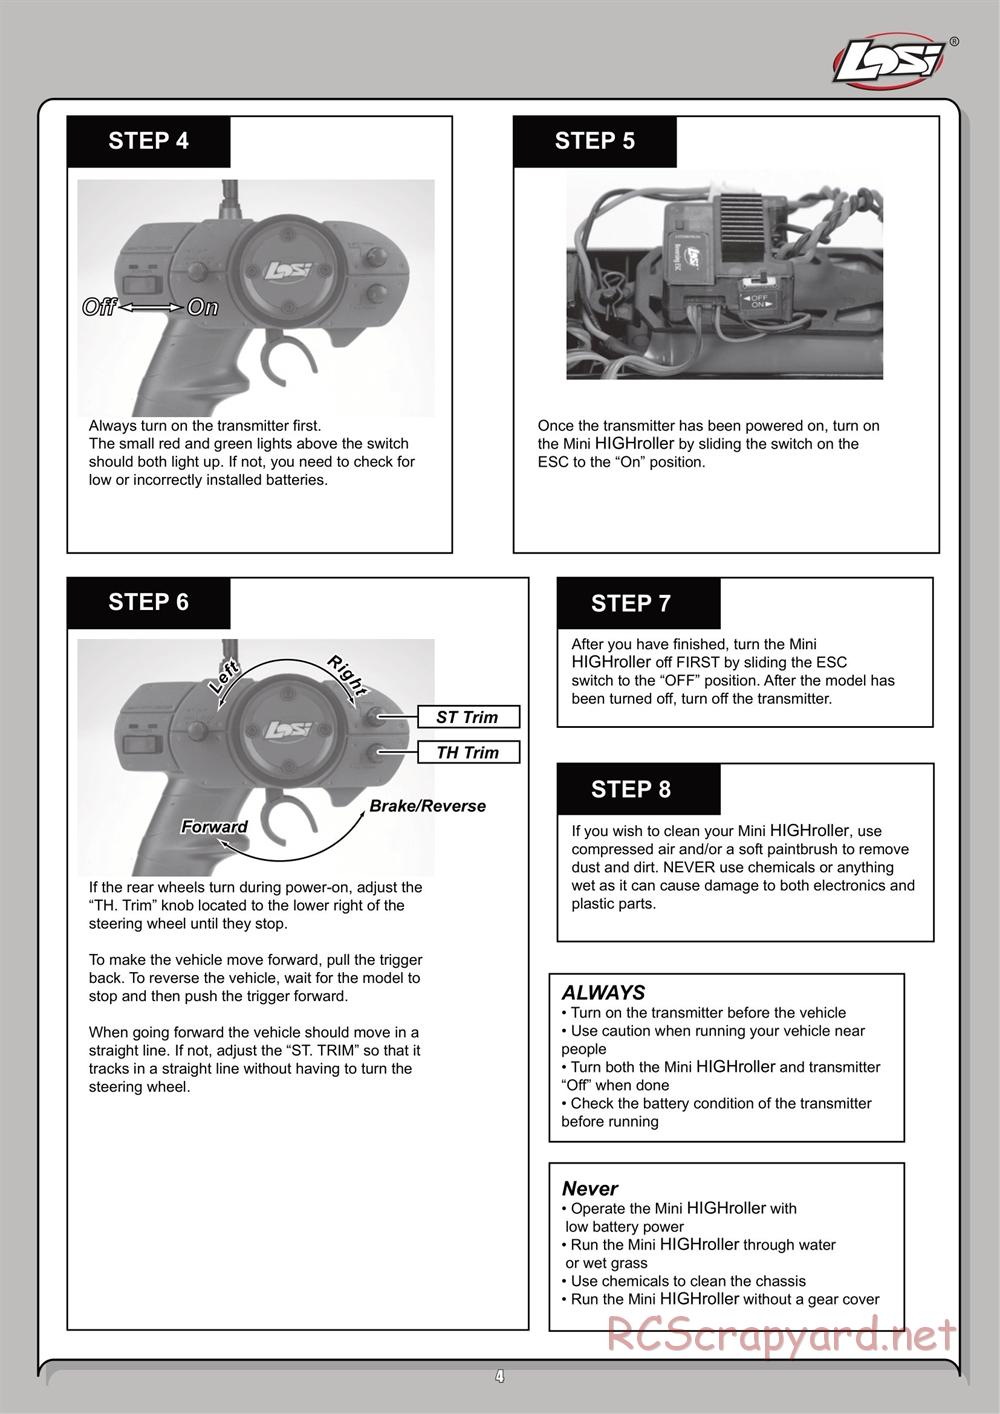 Team Losi - Mini High-Roller - Manual - Page 4